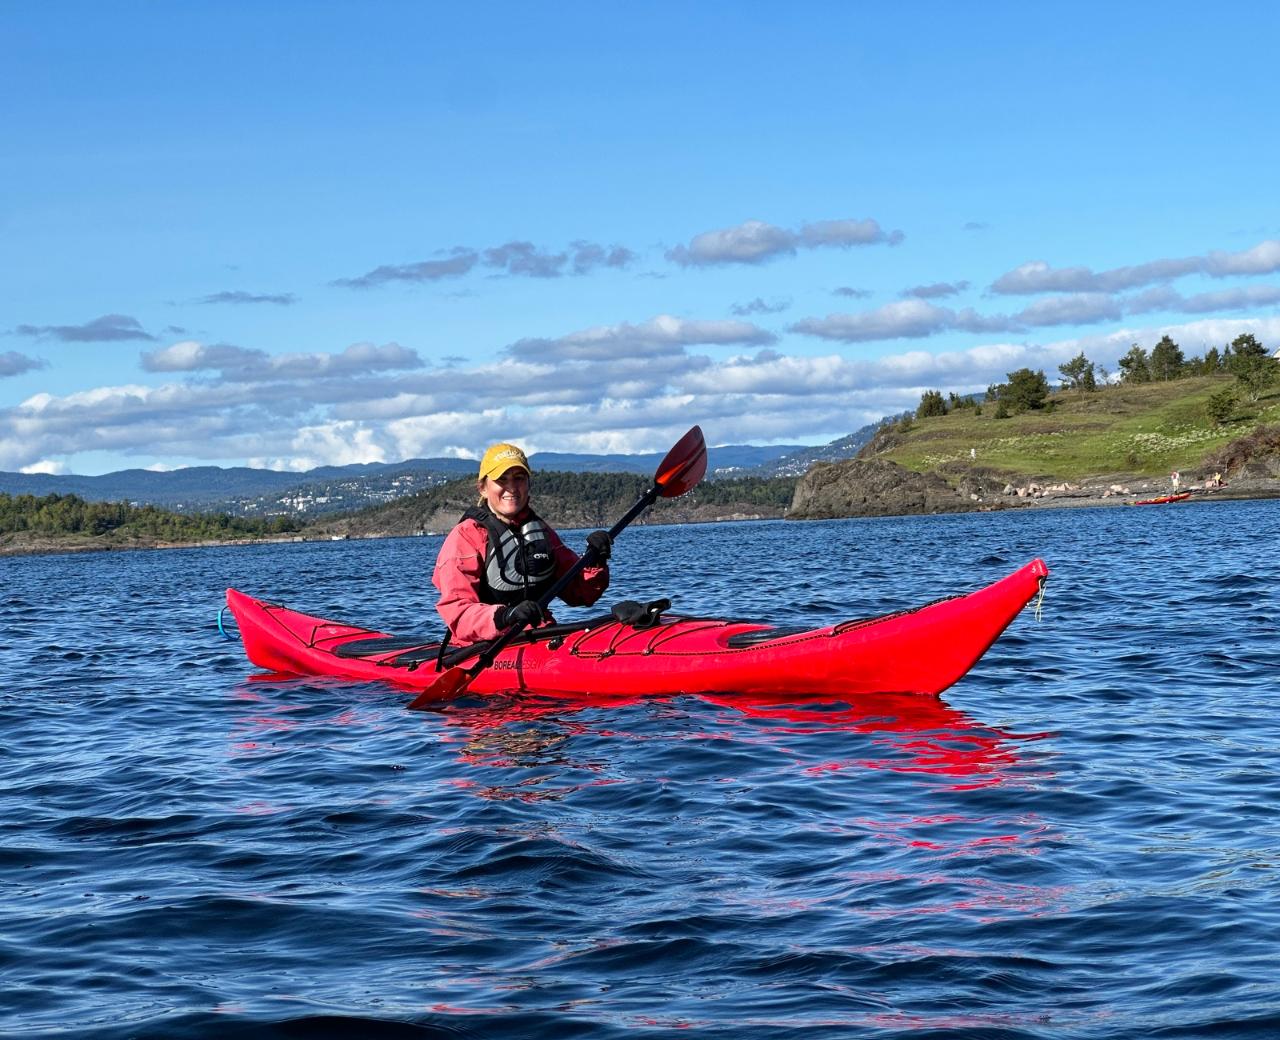 14hr Våttkort Beginner Course (grunnkurs) in Sea Kayaking - 2 x days - Lysaker, Oslo